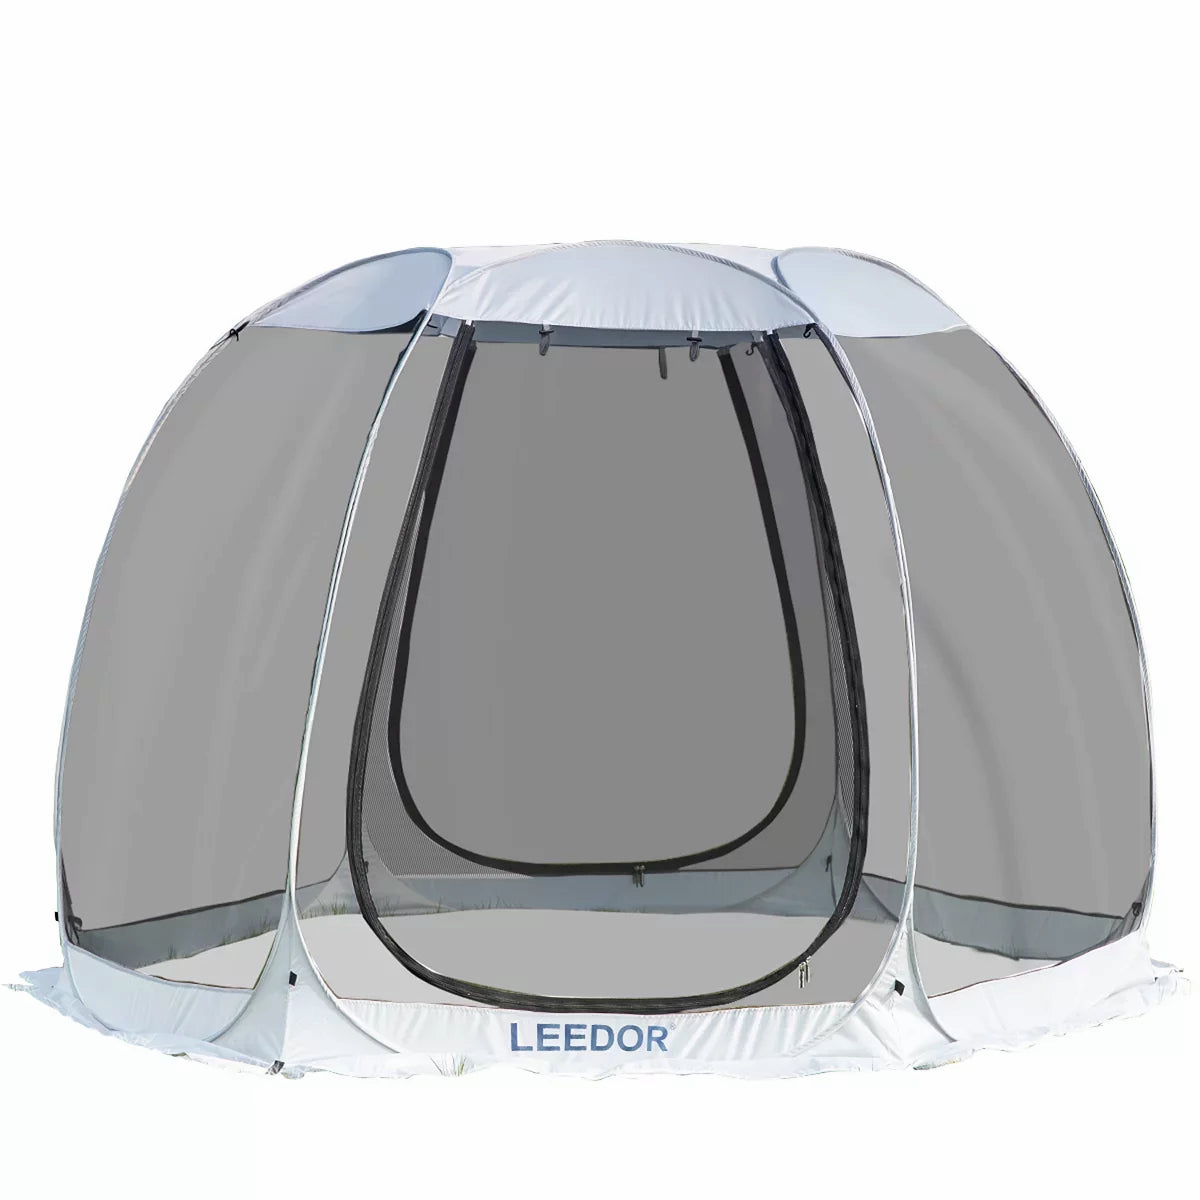 leedor gazebo tent white polyester pop up screen house